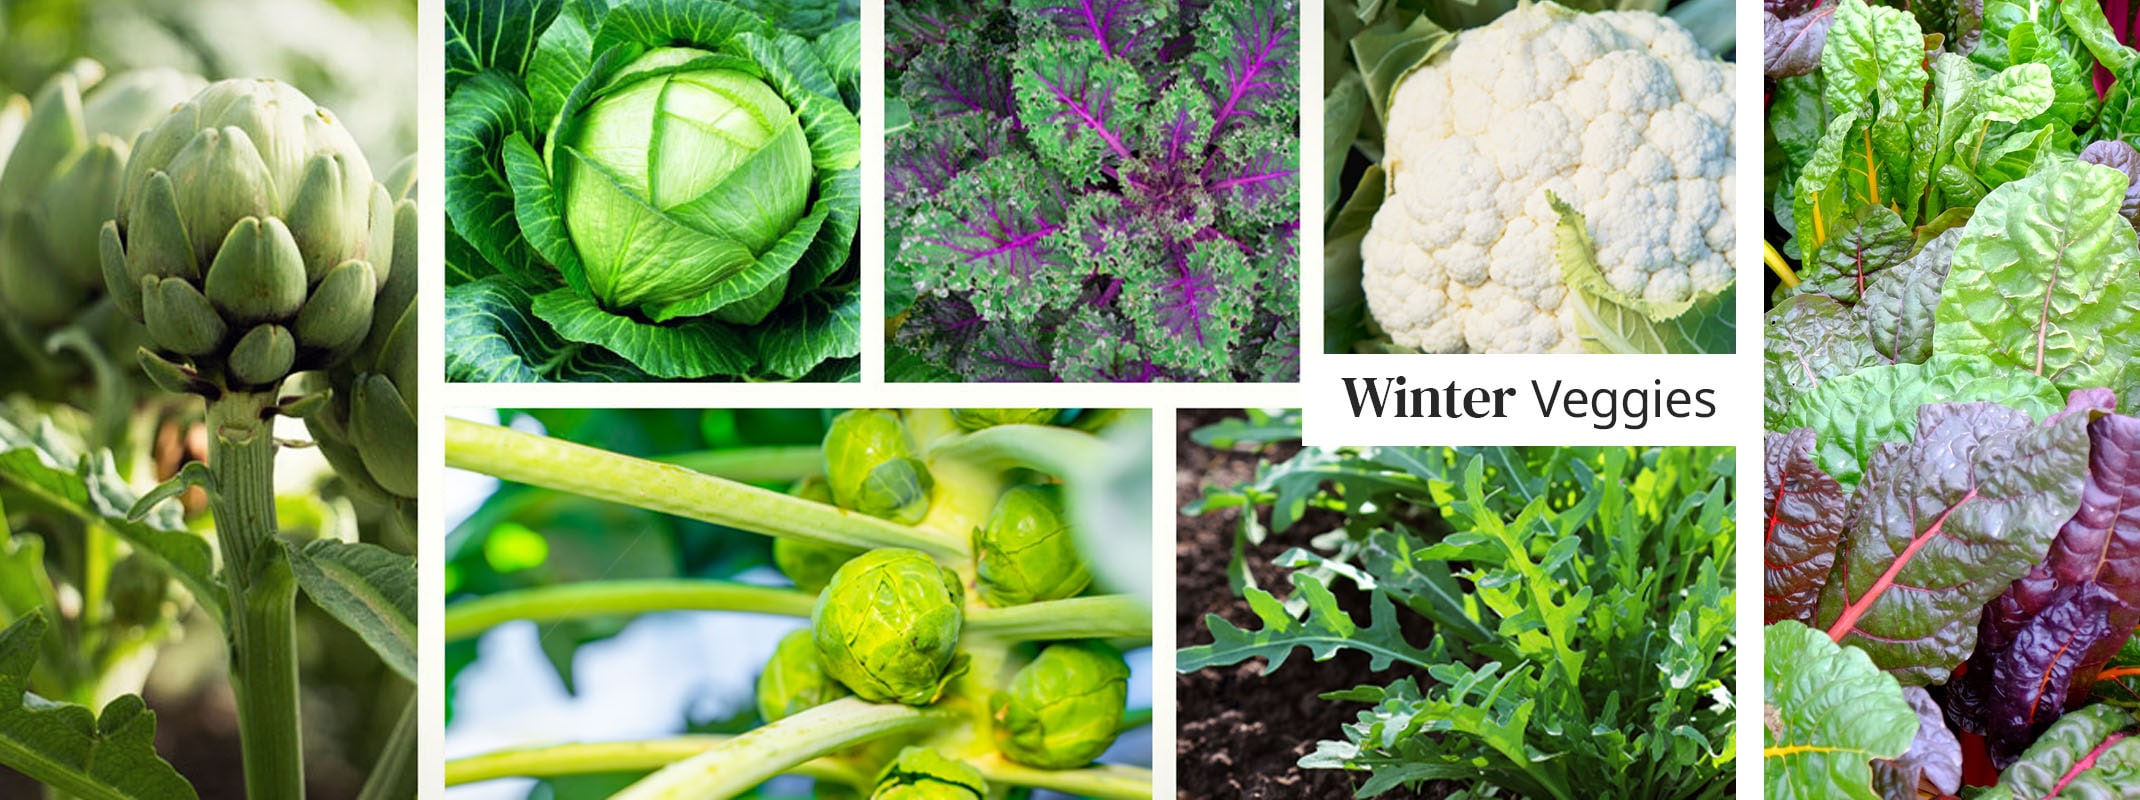 winter veggies artichokes, cabbage, kale, brussels sprouts, arugula, swiss chard and cauliflower